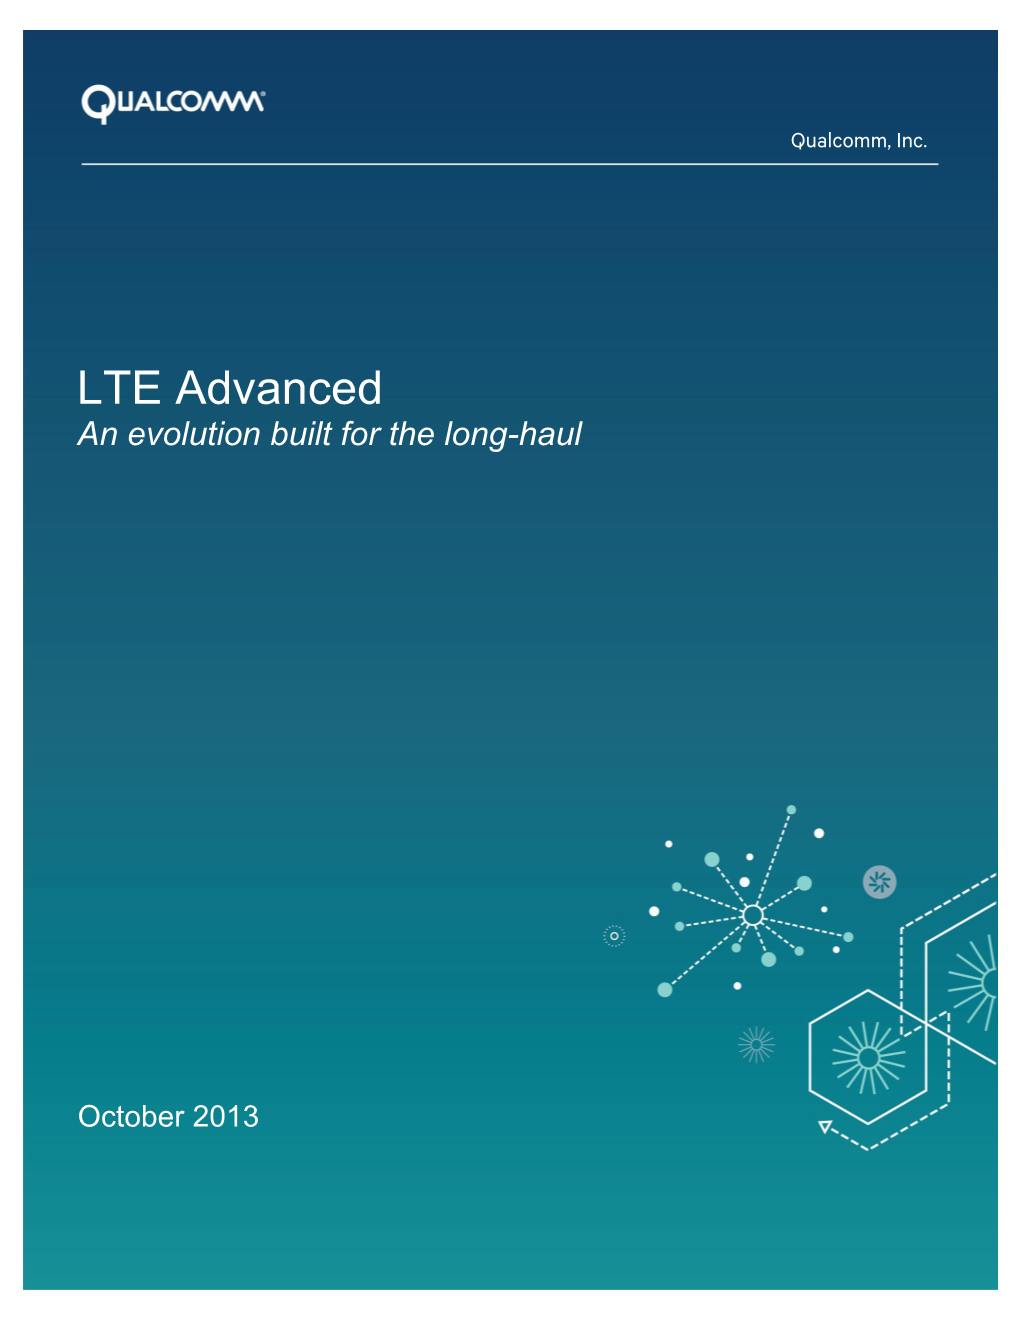 LTE Advanced an Evolution Built for the Long-Haul